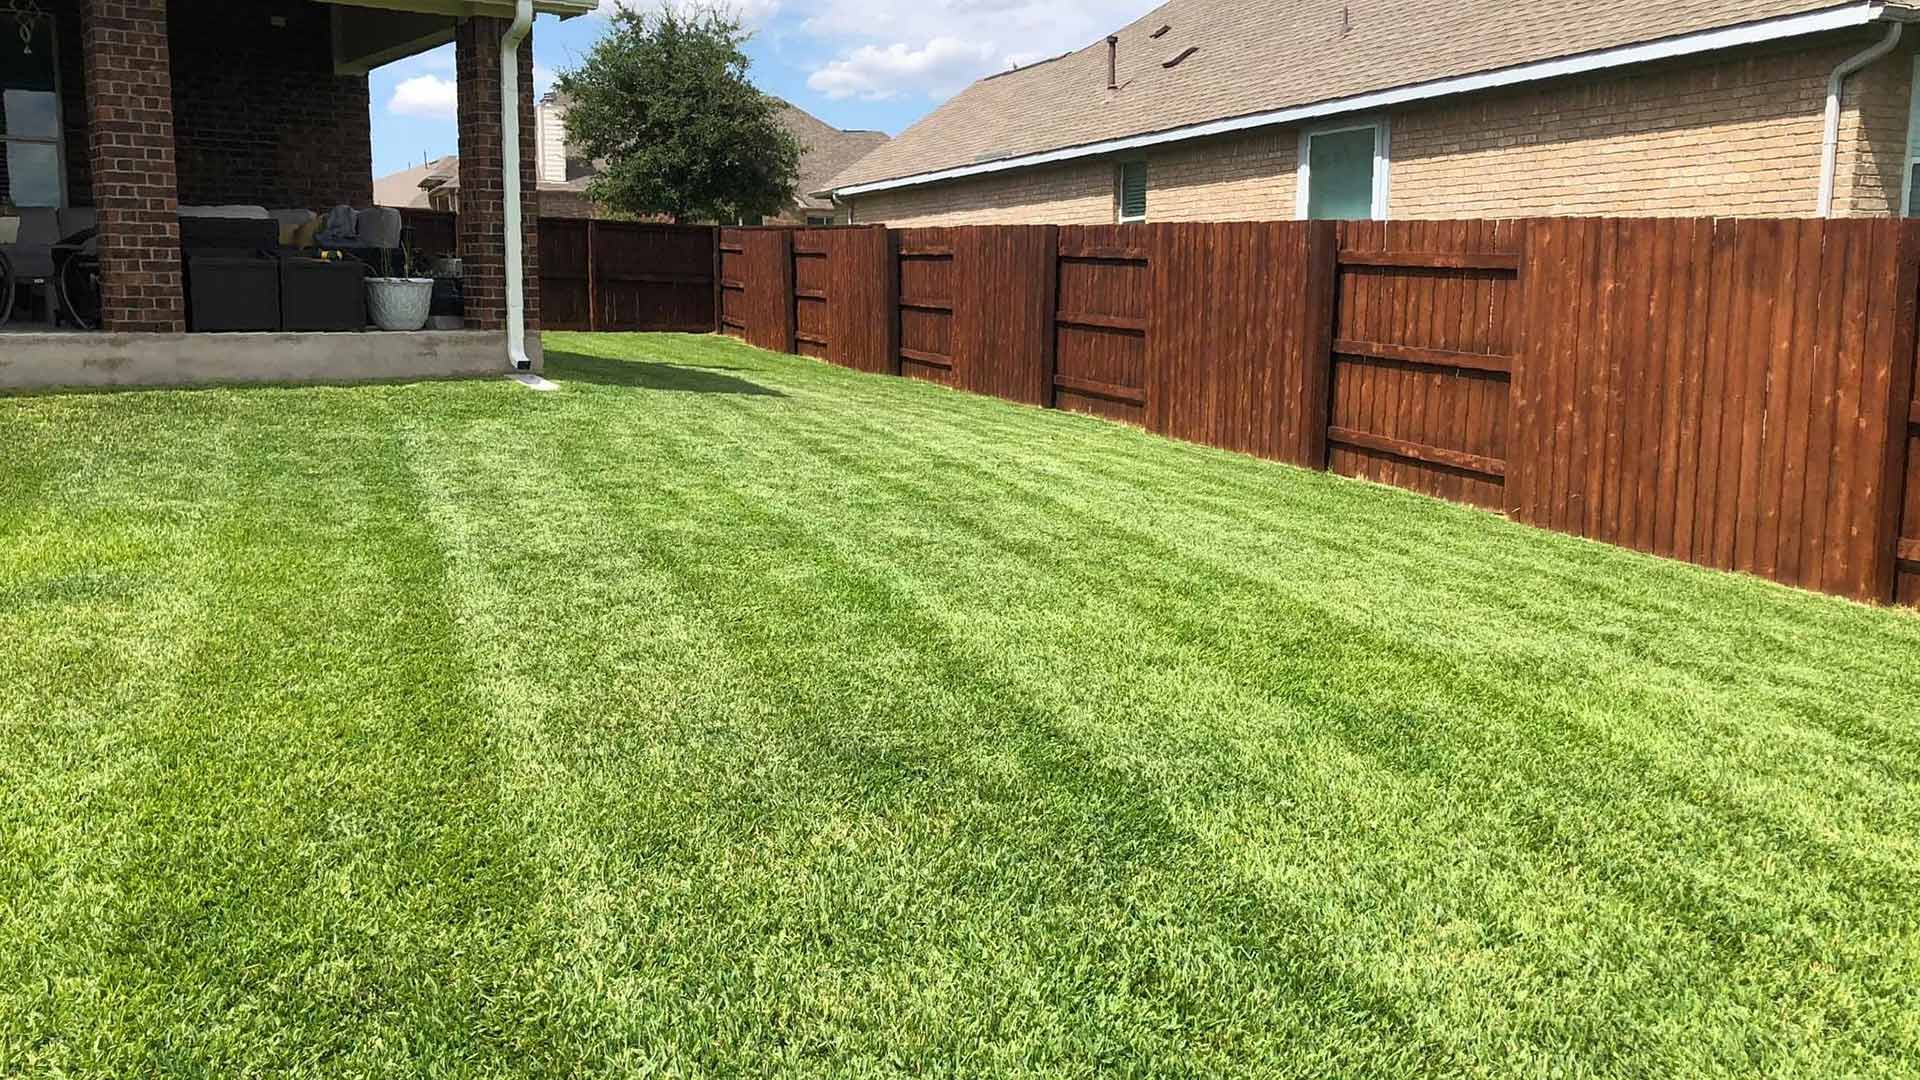 Lawn care serviced in Austin, TX.